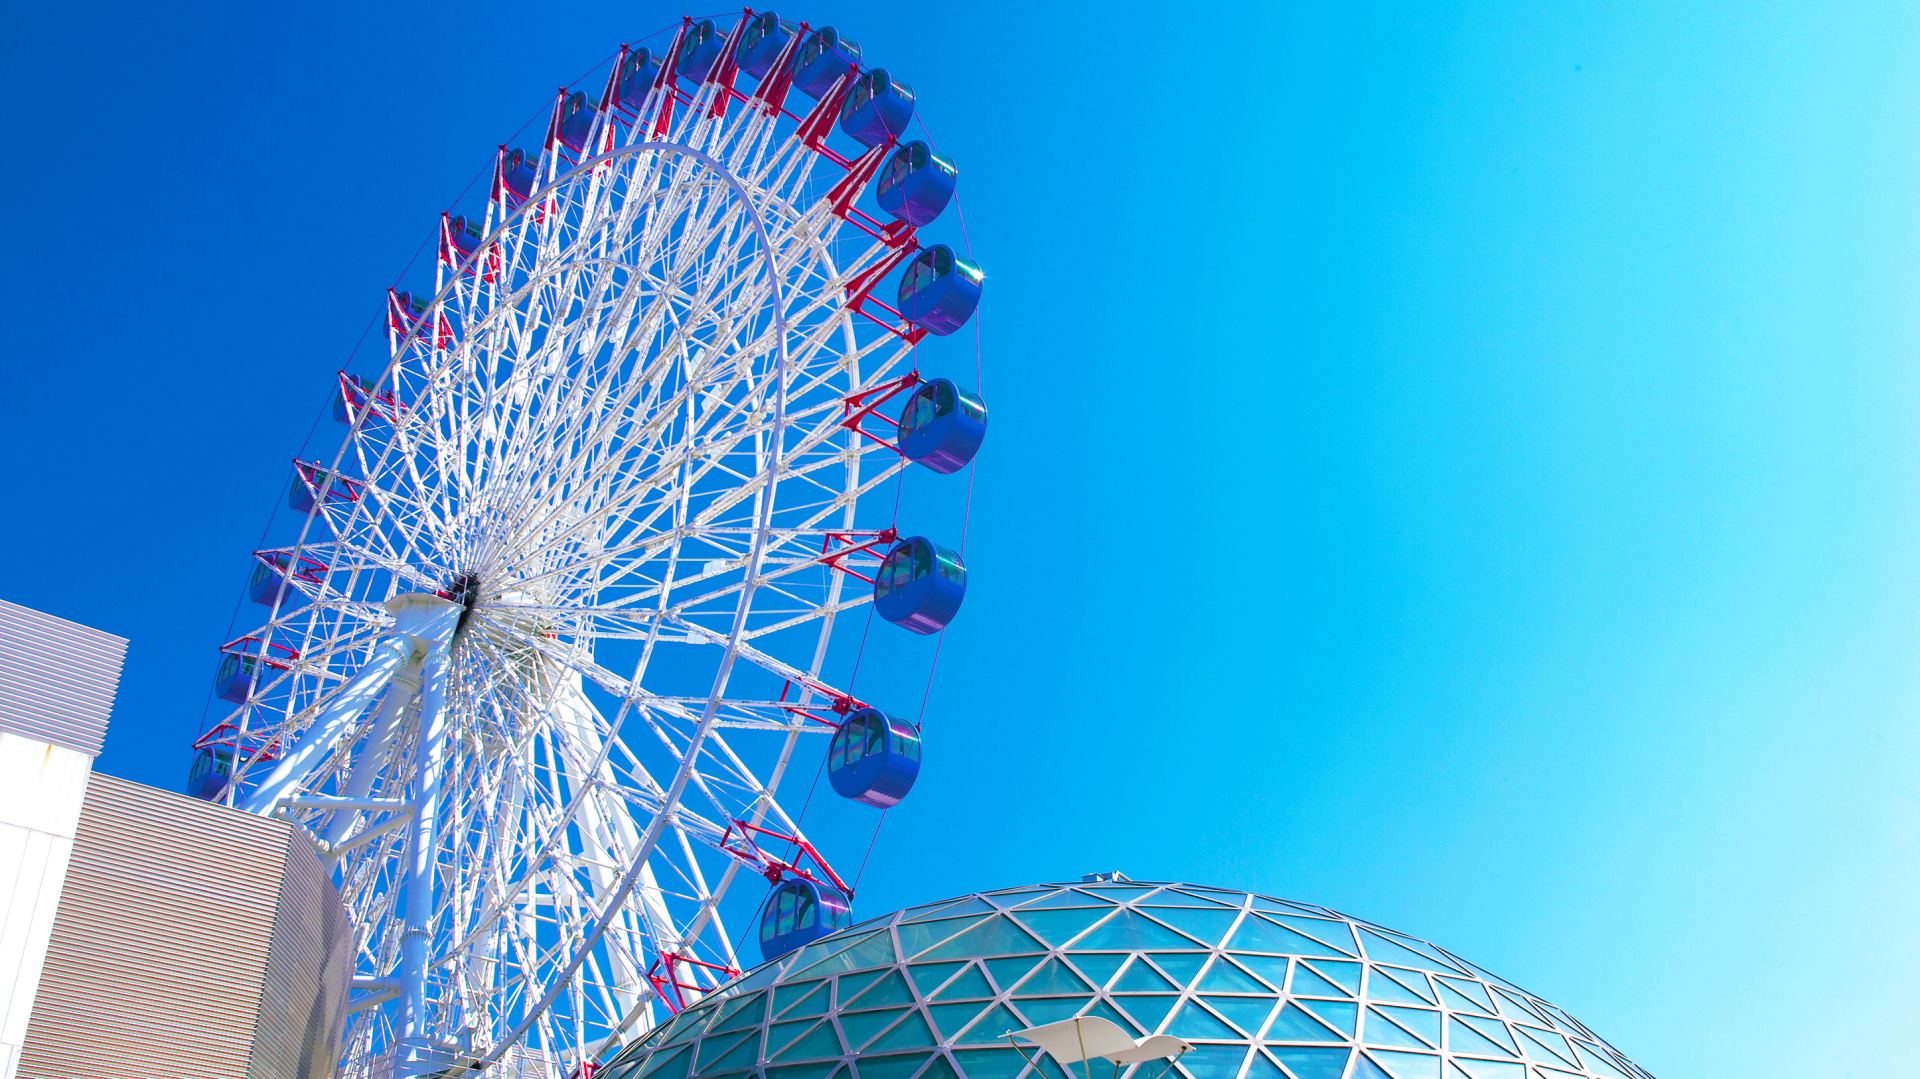 The Ferris wheel Kururin has become a new iconic symbol of Matsuyama.